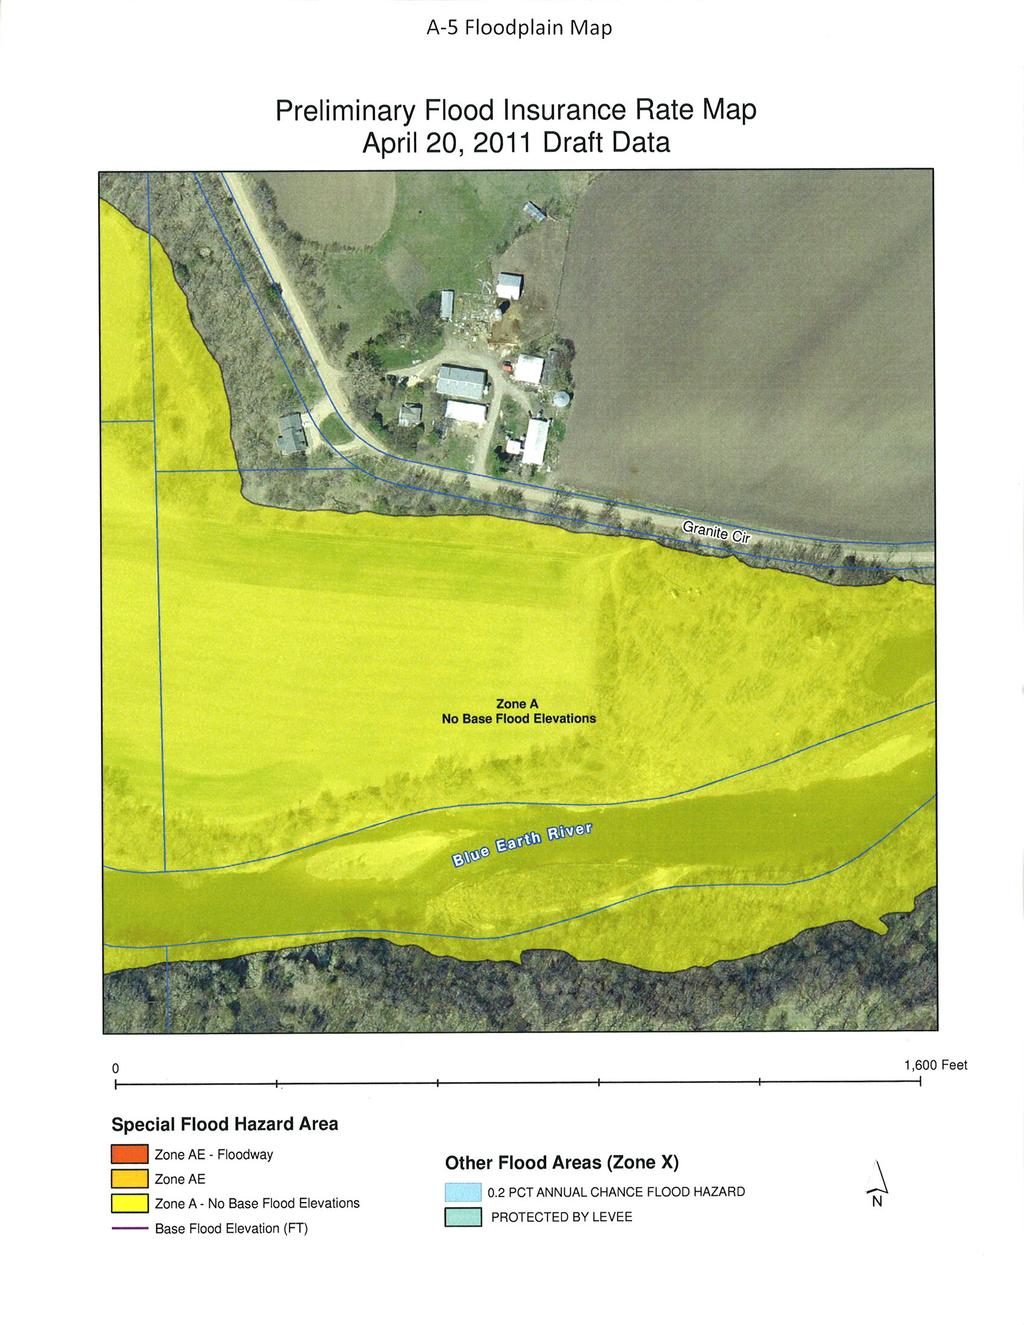 A-5 Floodplain Map Preliminary Flood lnsurance Rate Map April 20, 2011 Draft Data 1,600 Feel Special Flood Hazard Area I I I - ZoneRE - Floodway Zone